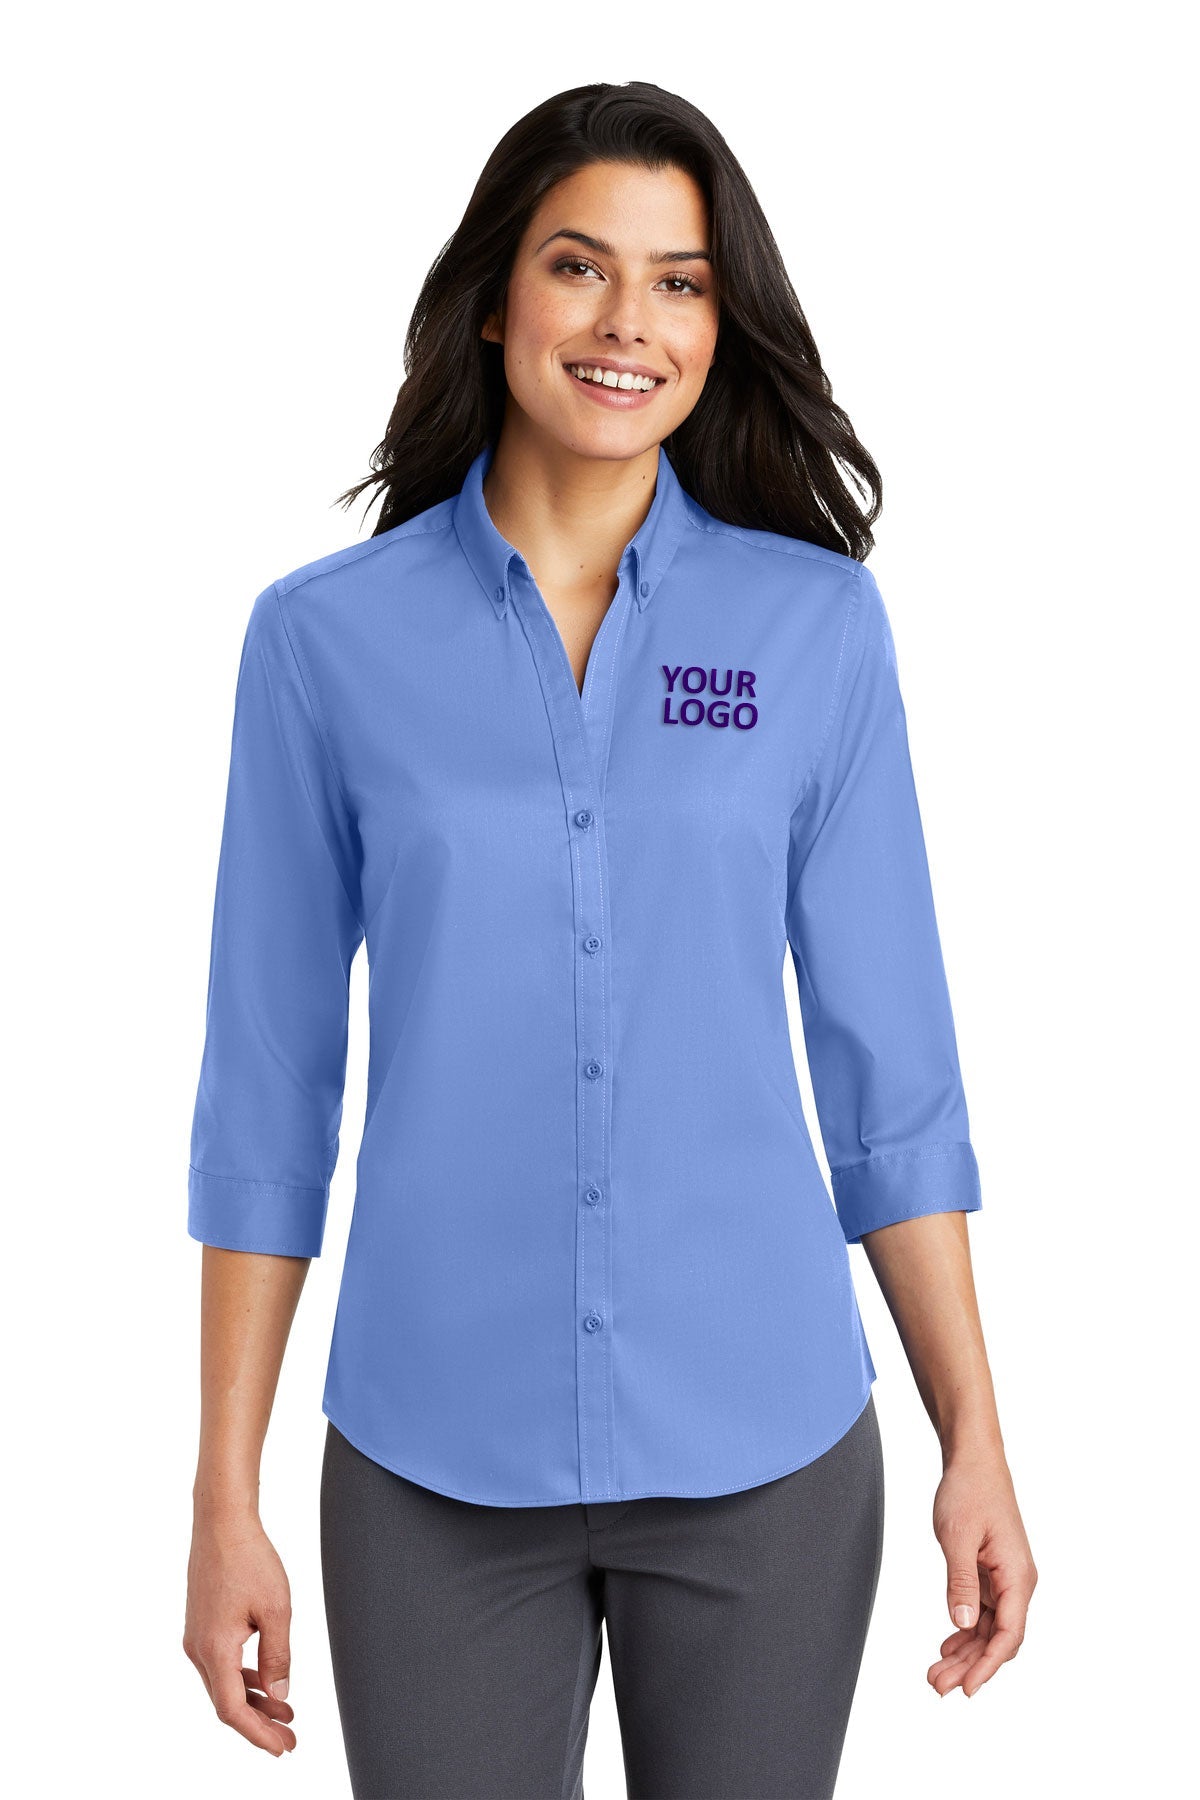 Port Authority Ultramarine Blue L665 custom logo shirts